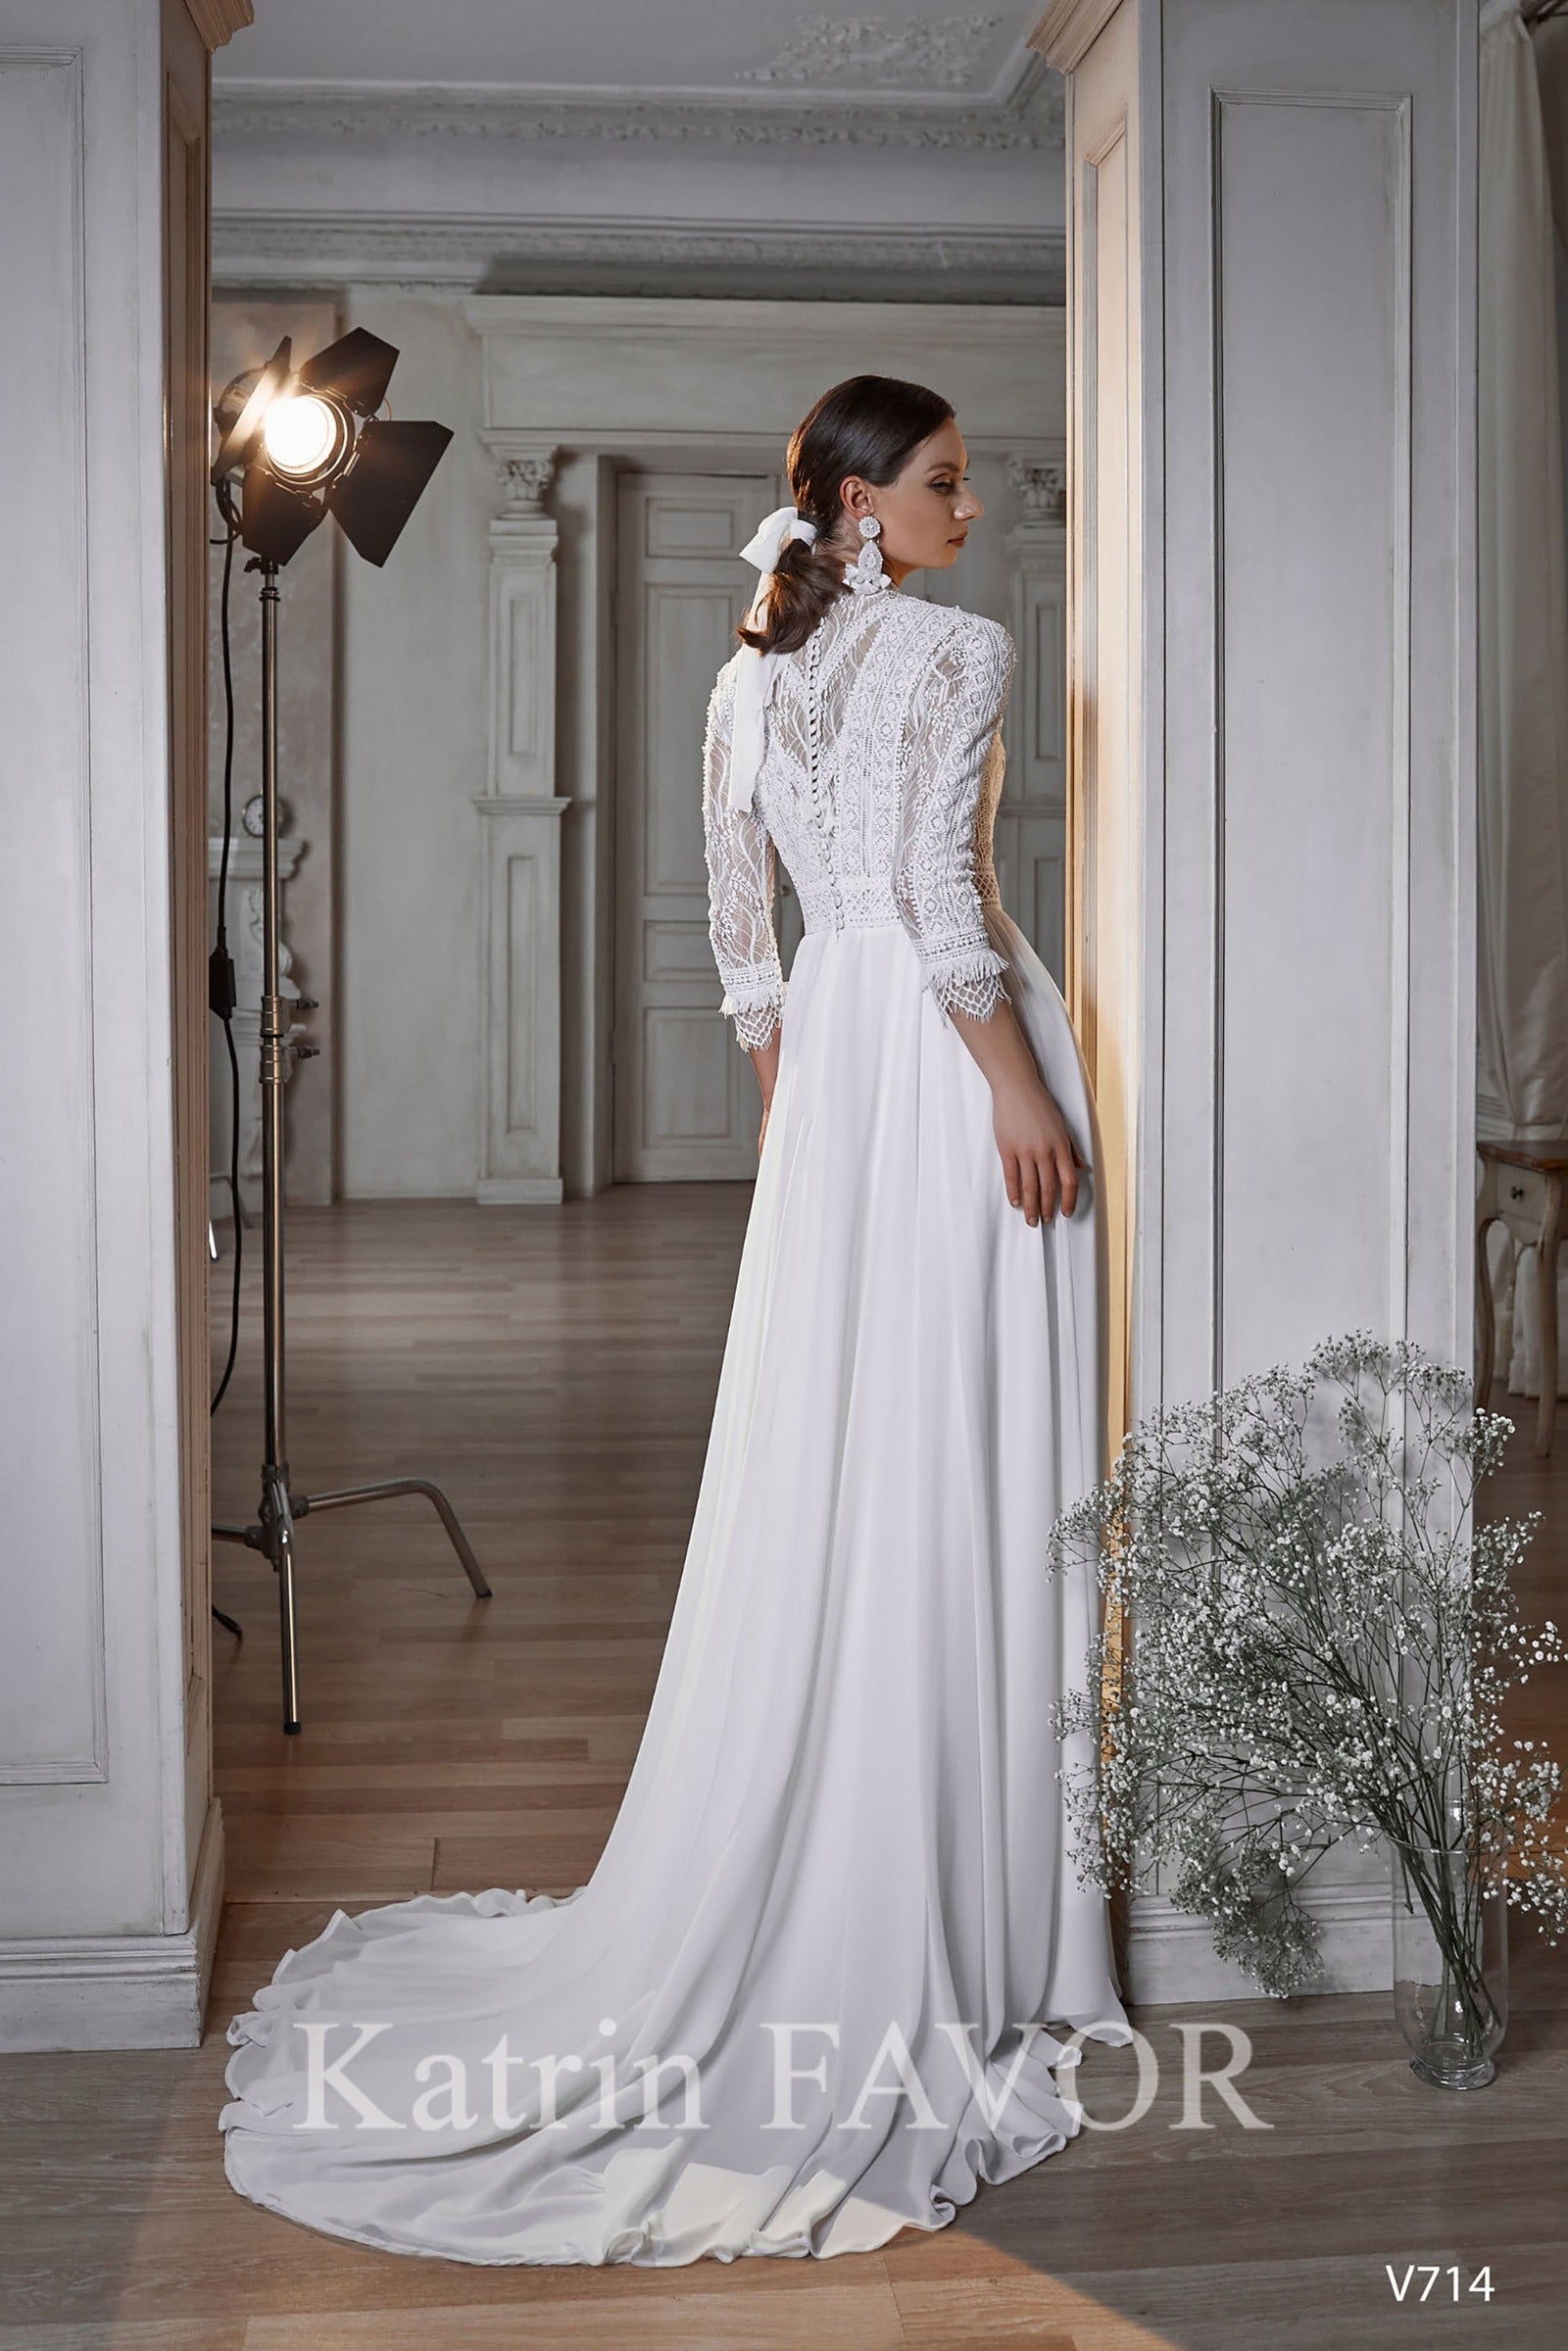 KatrinFAVORboutique-Modest high neck country wedding dress